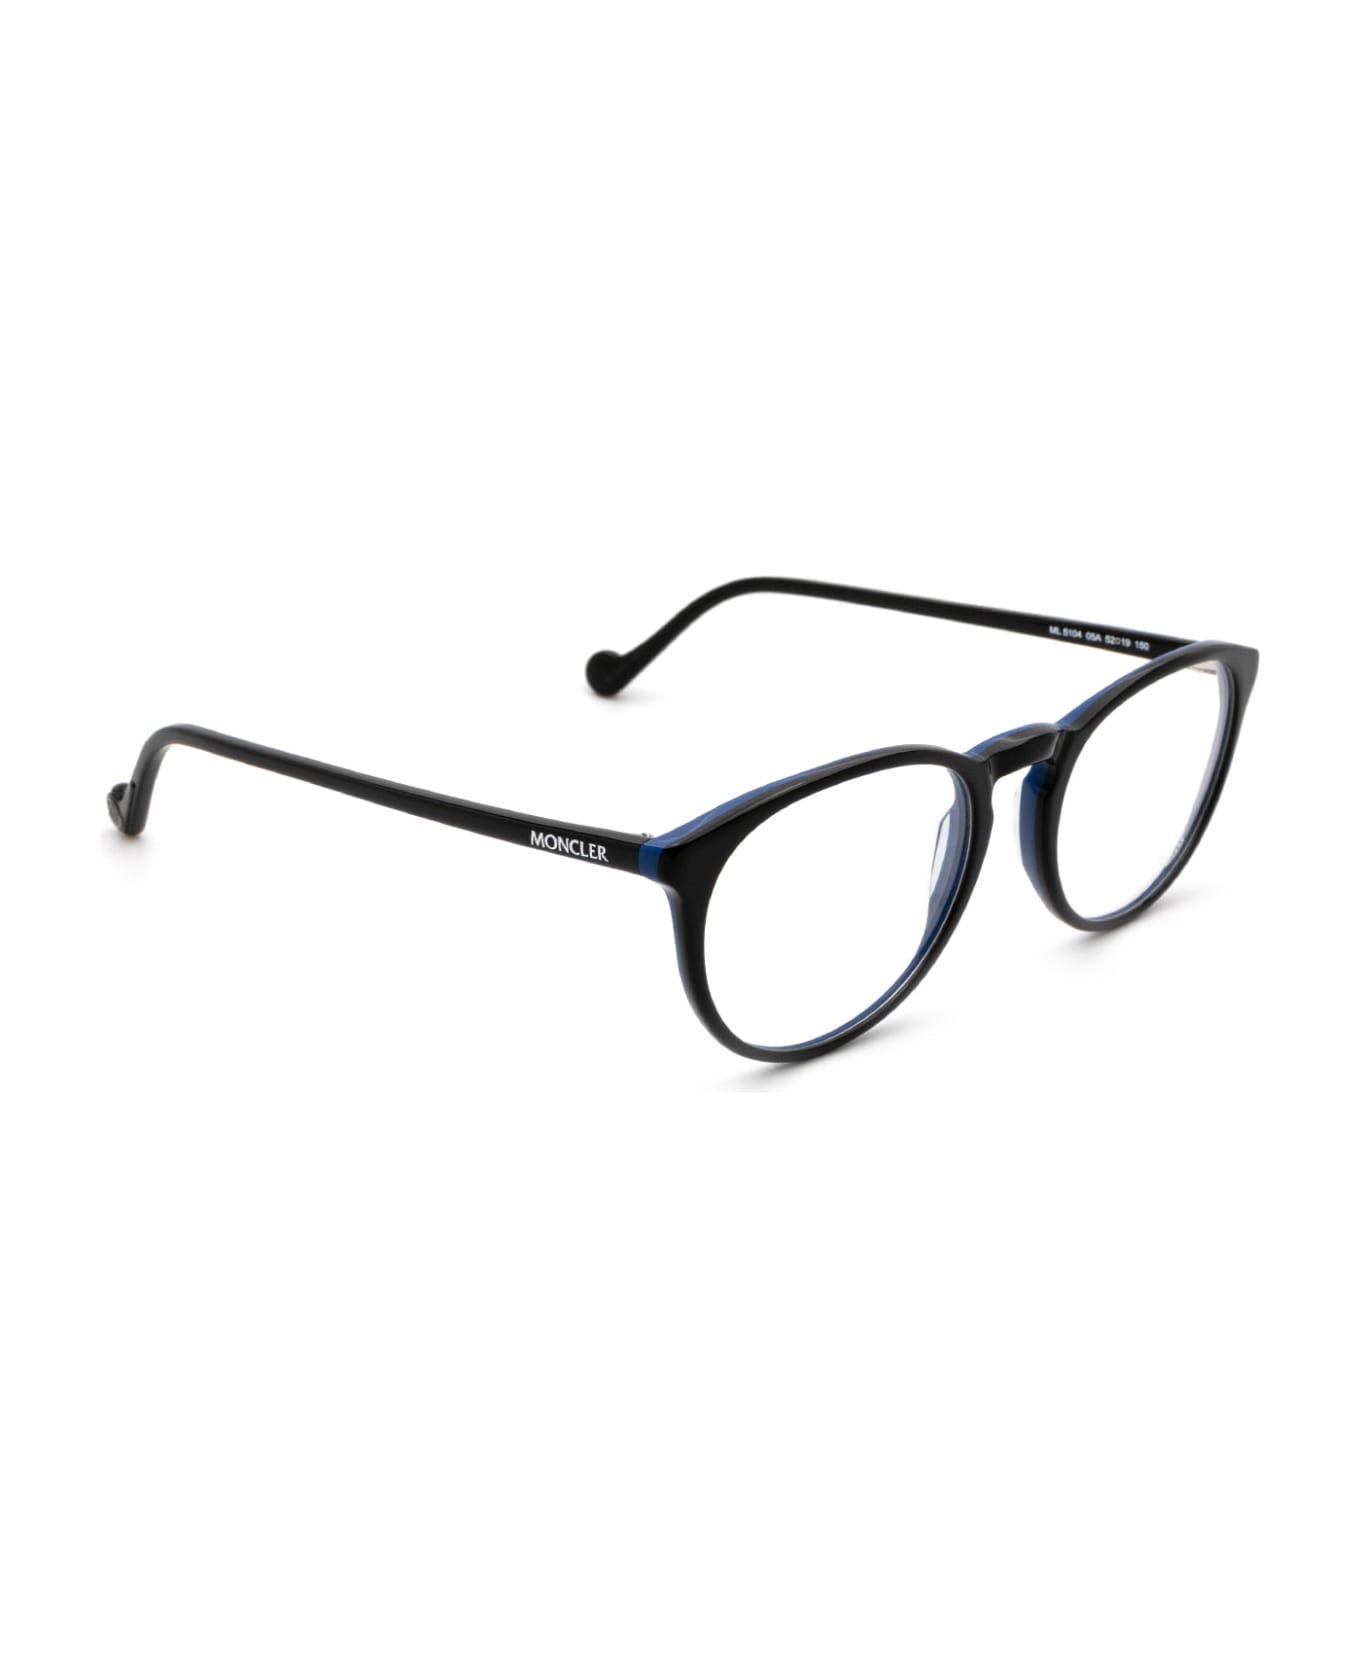 Moncler Eyewear Ml5104 Shiny Black Glasses - Shiny Black